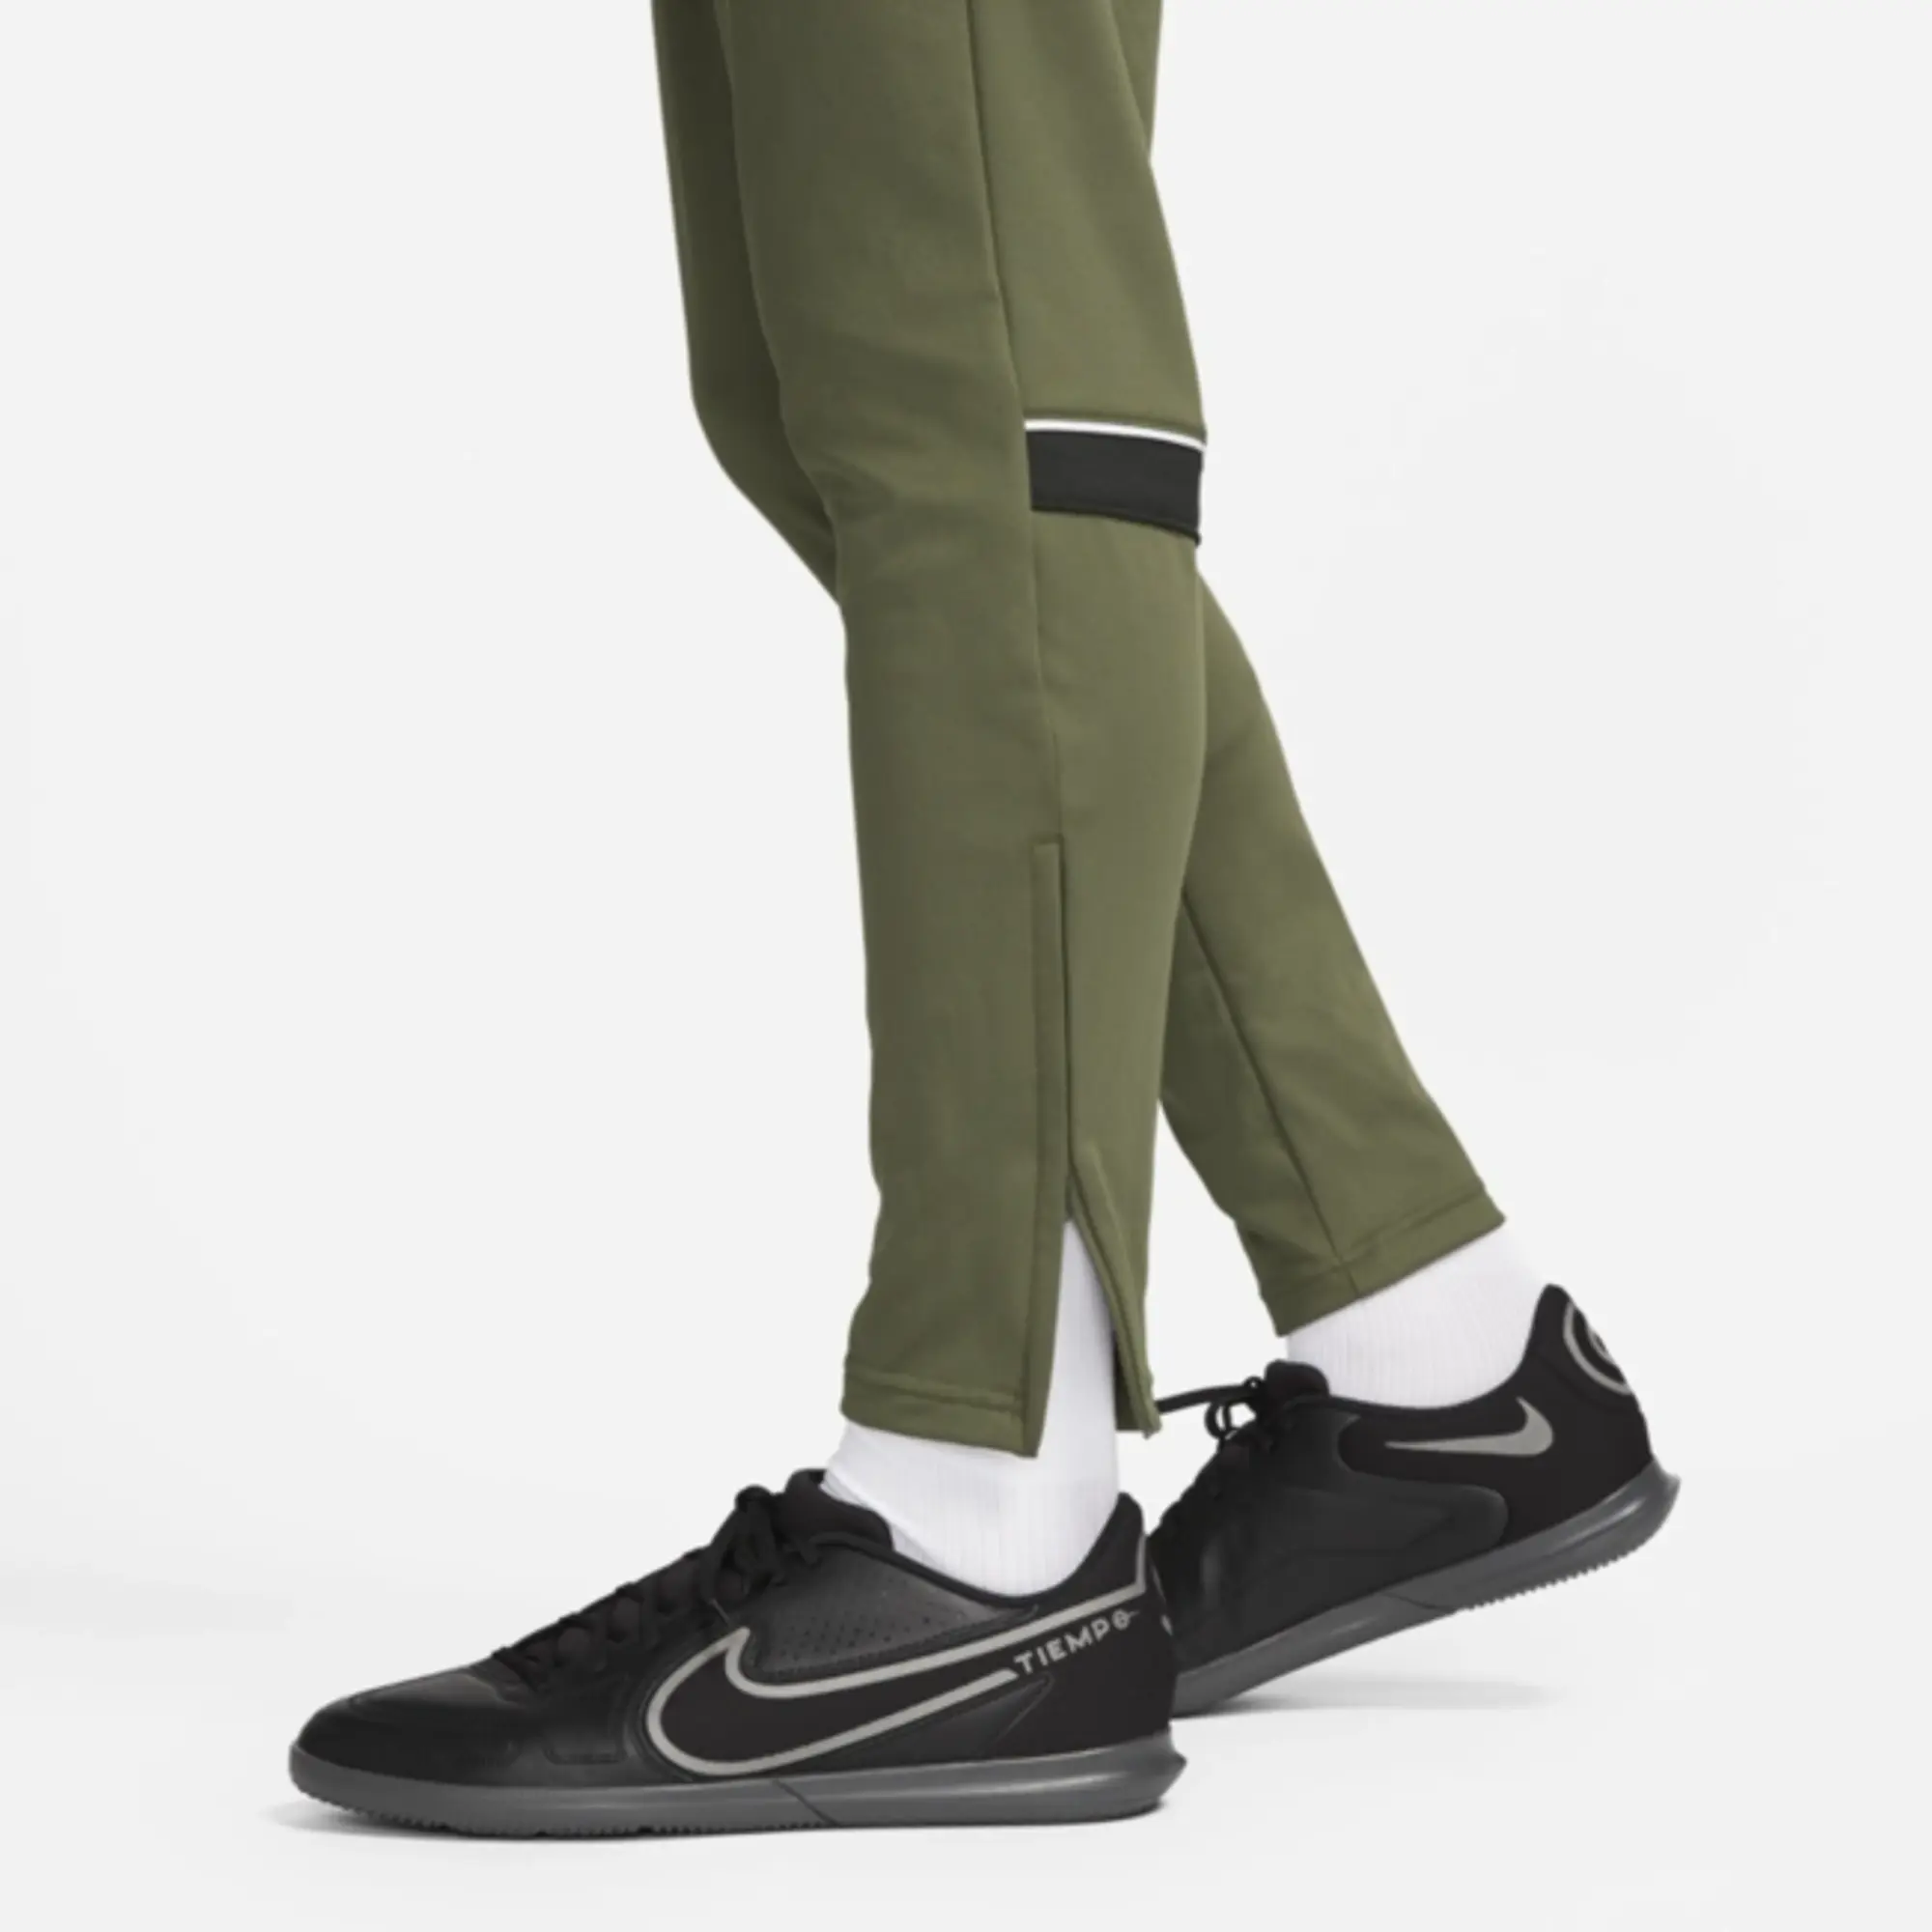 Nike Academy Track Pants Mens - Green